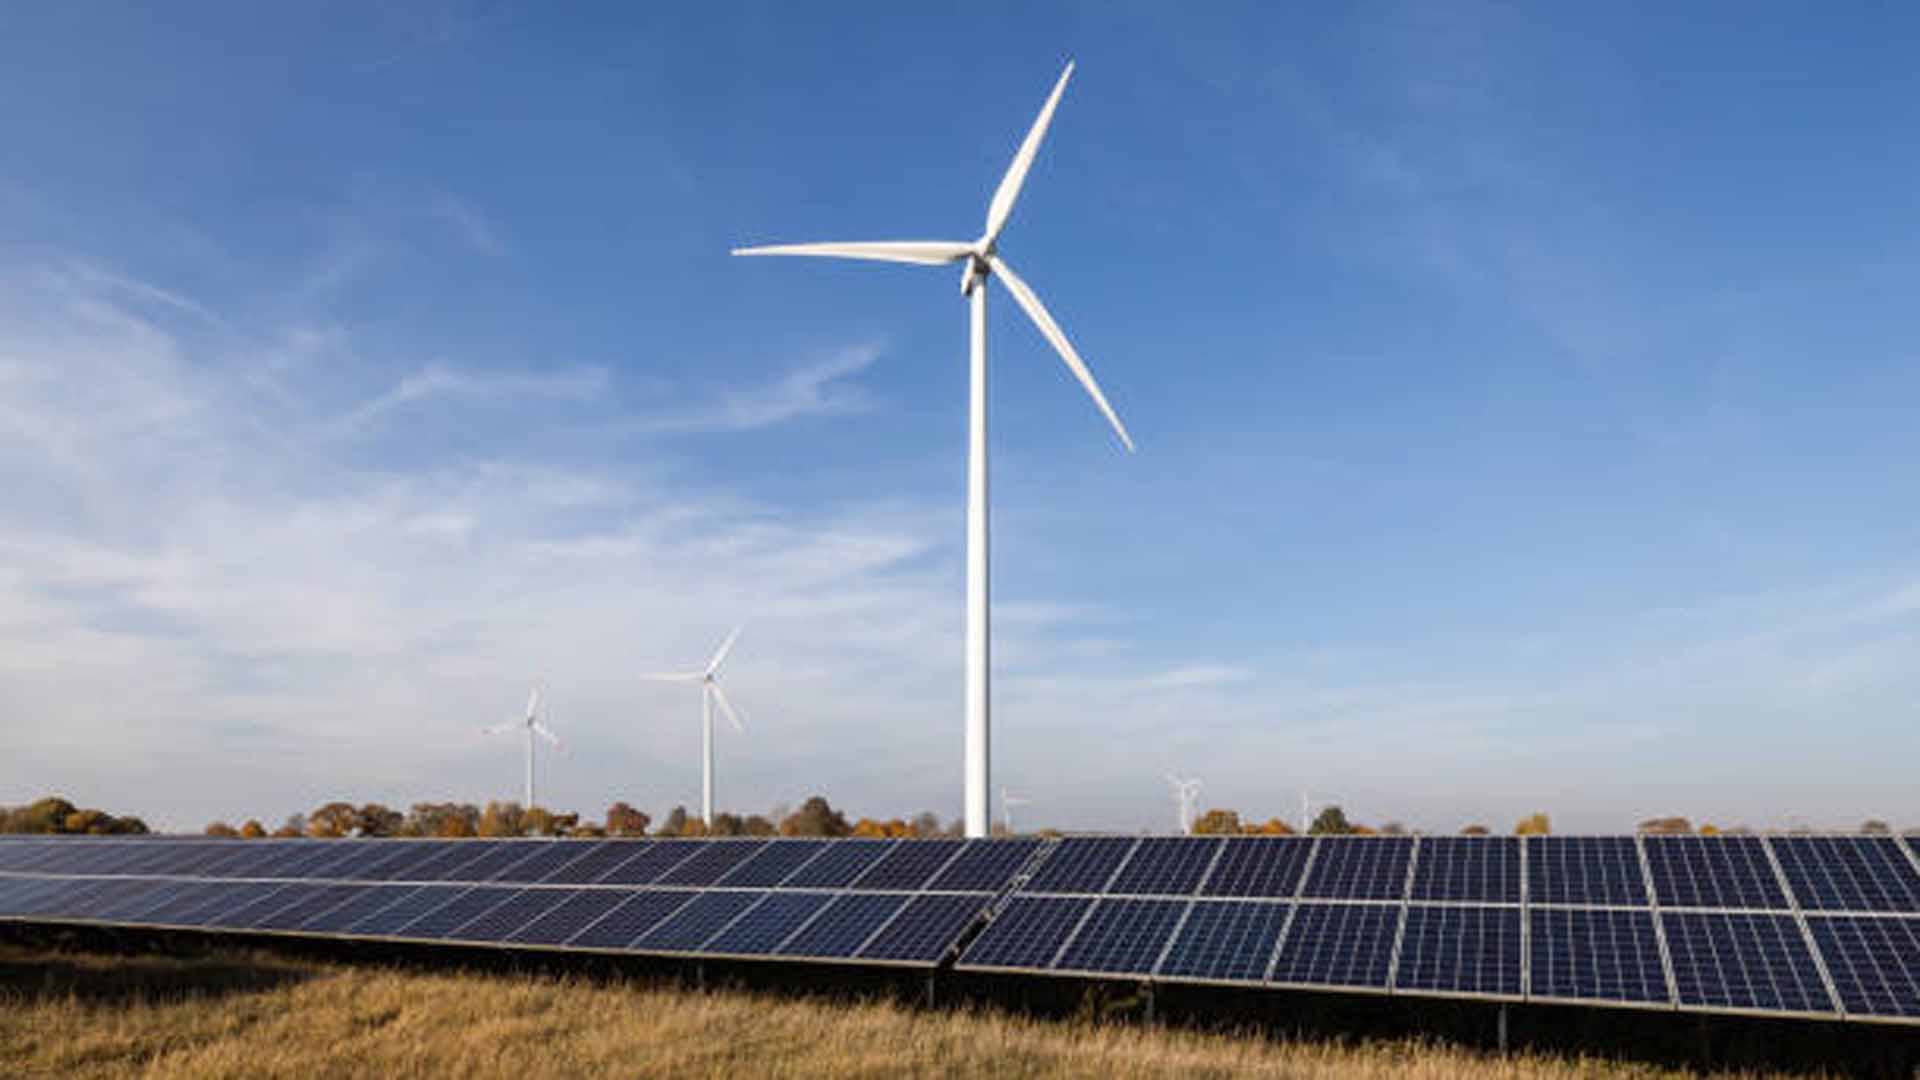 Wind turbine and solar energy